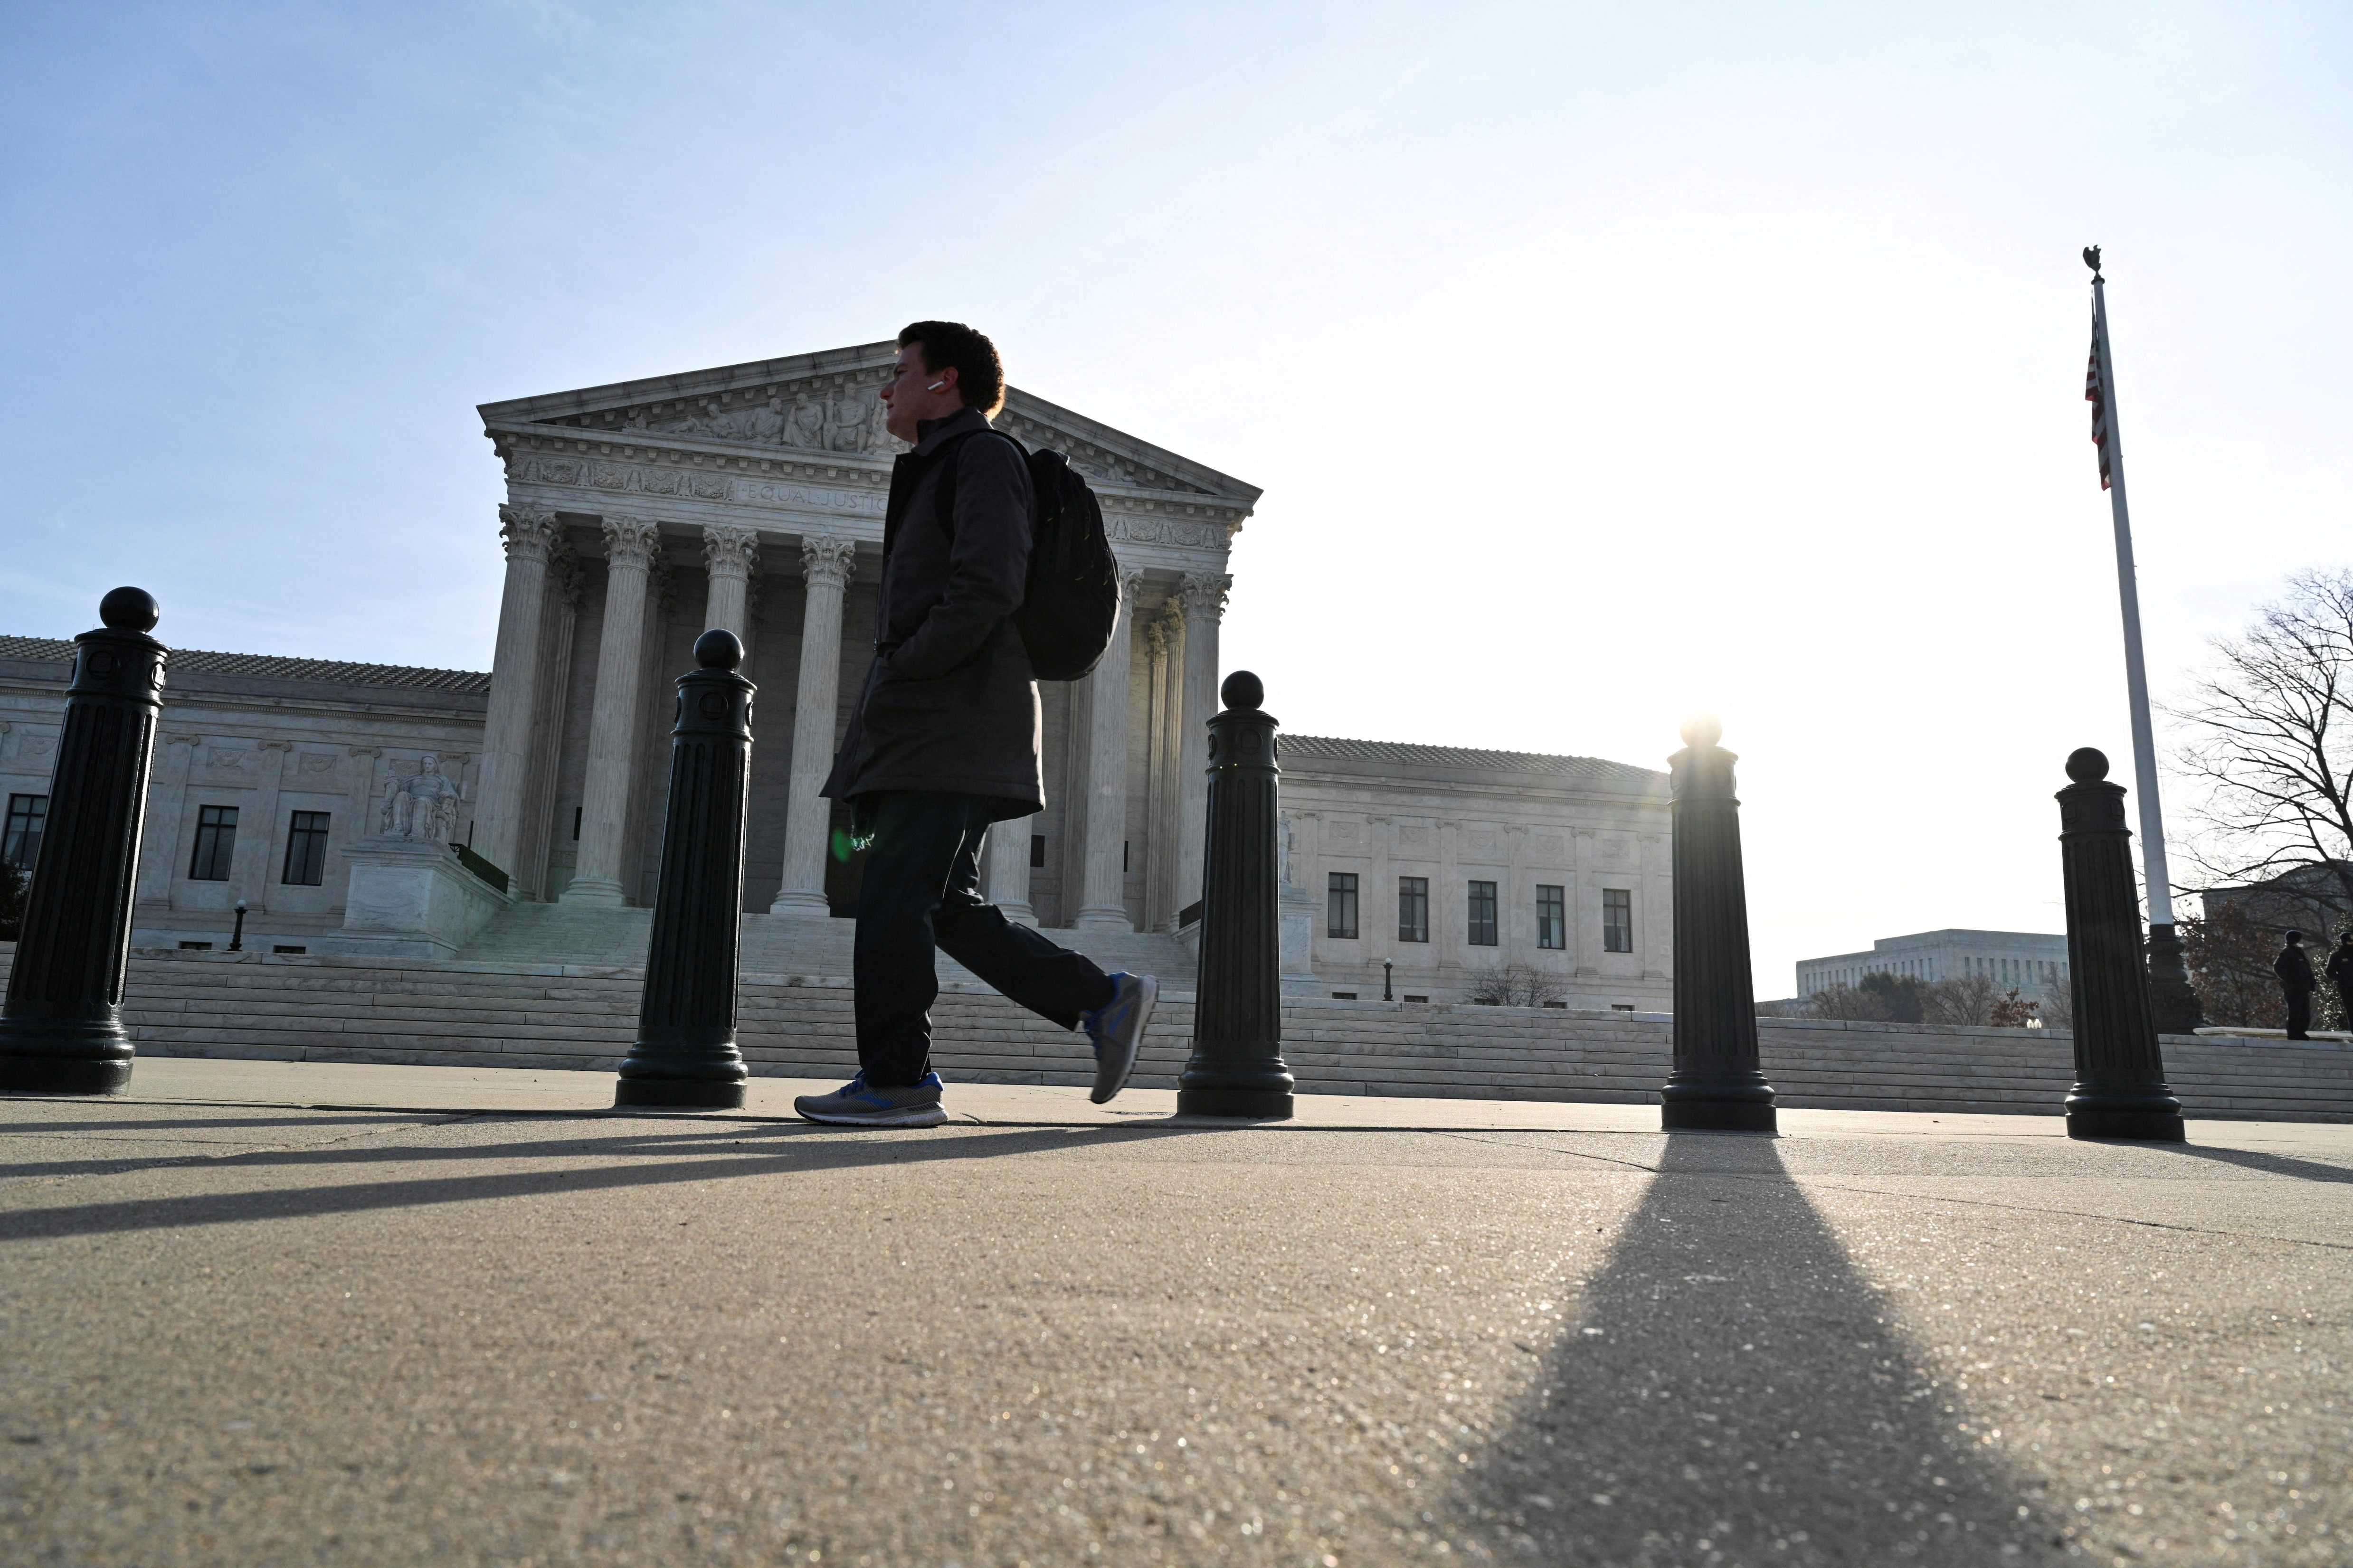 Person walks down the sidewalk near the U.S. Supreme Court building in Washington